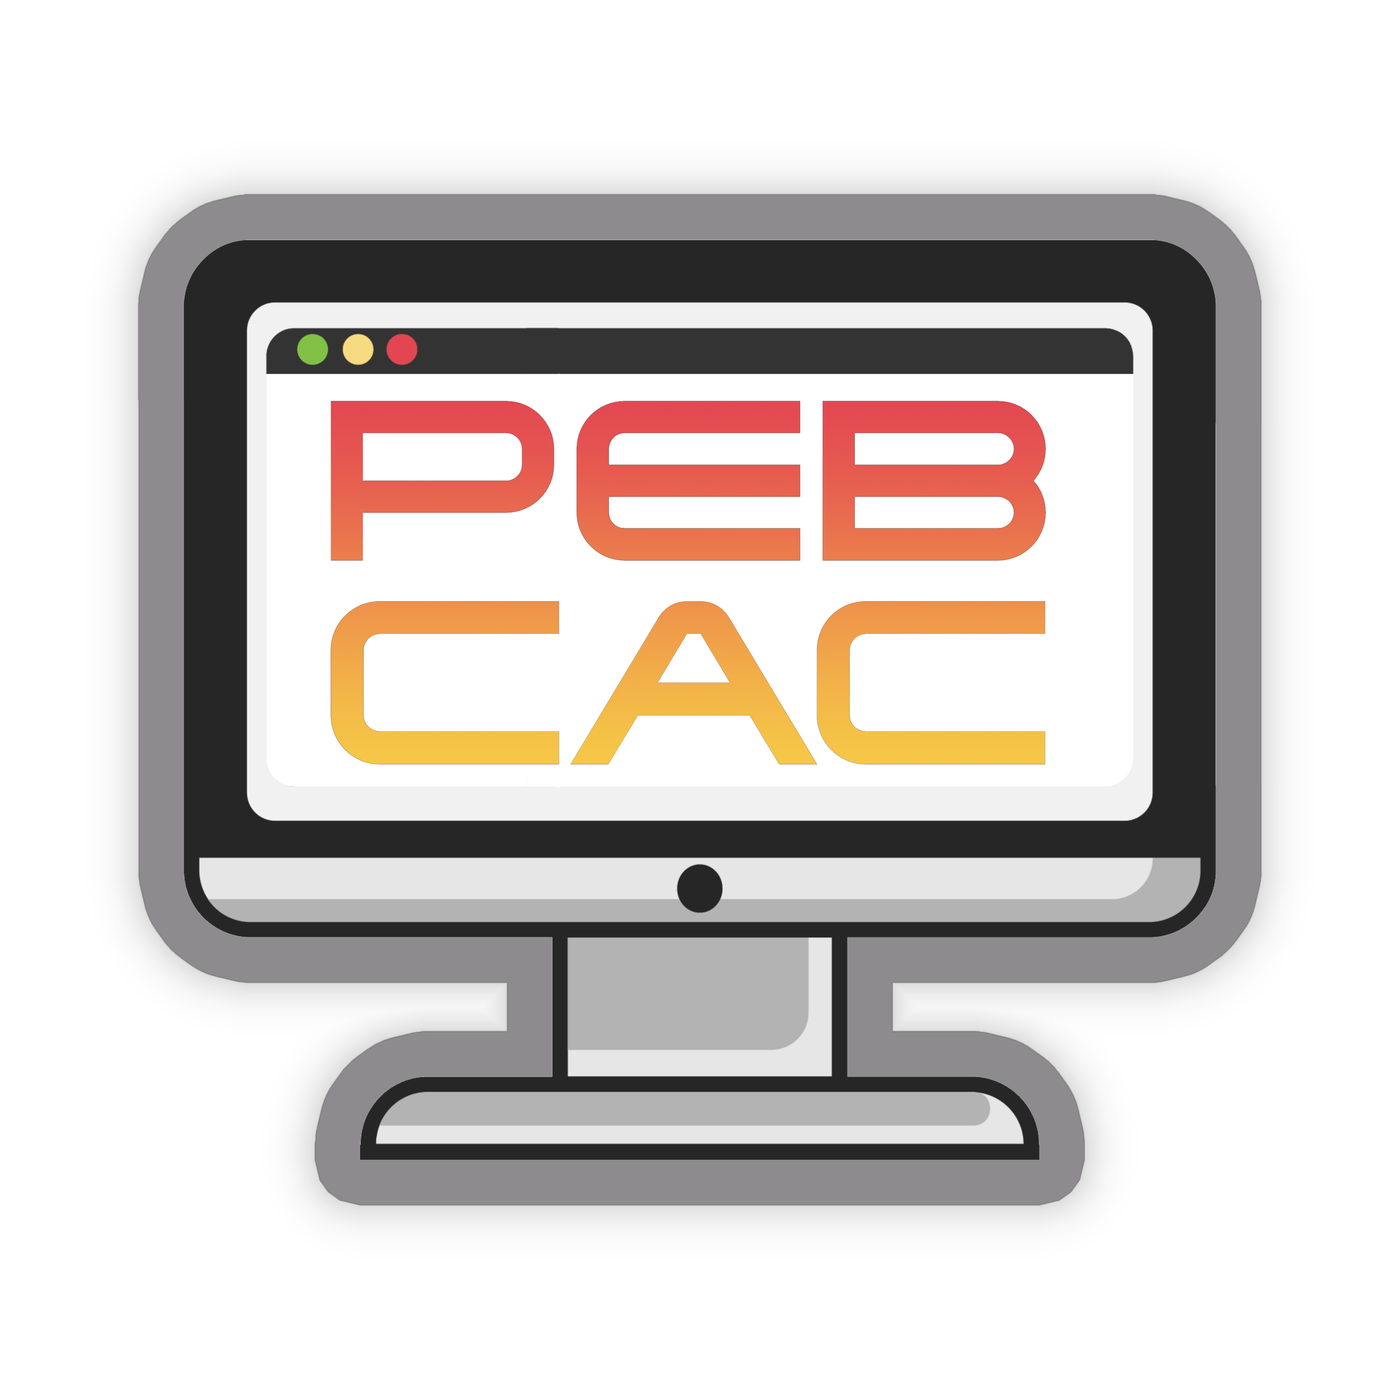 PEBCAC - Vinyl Sticker